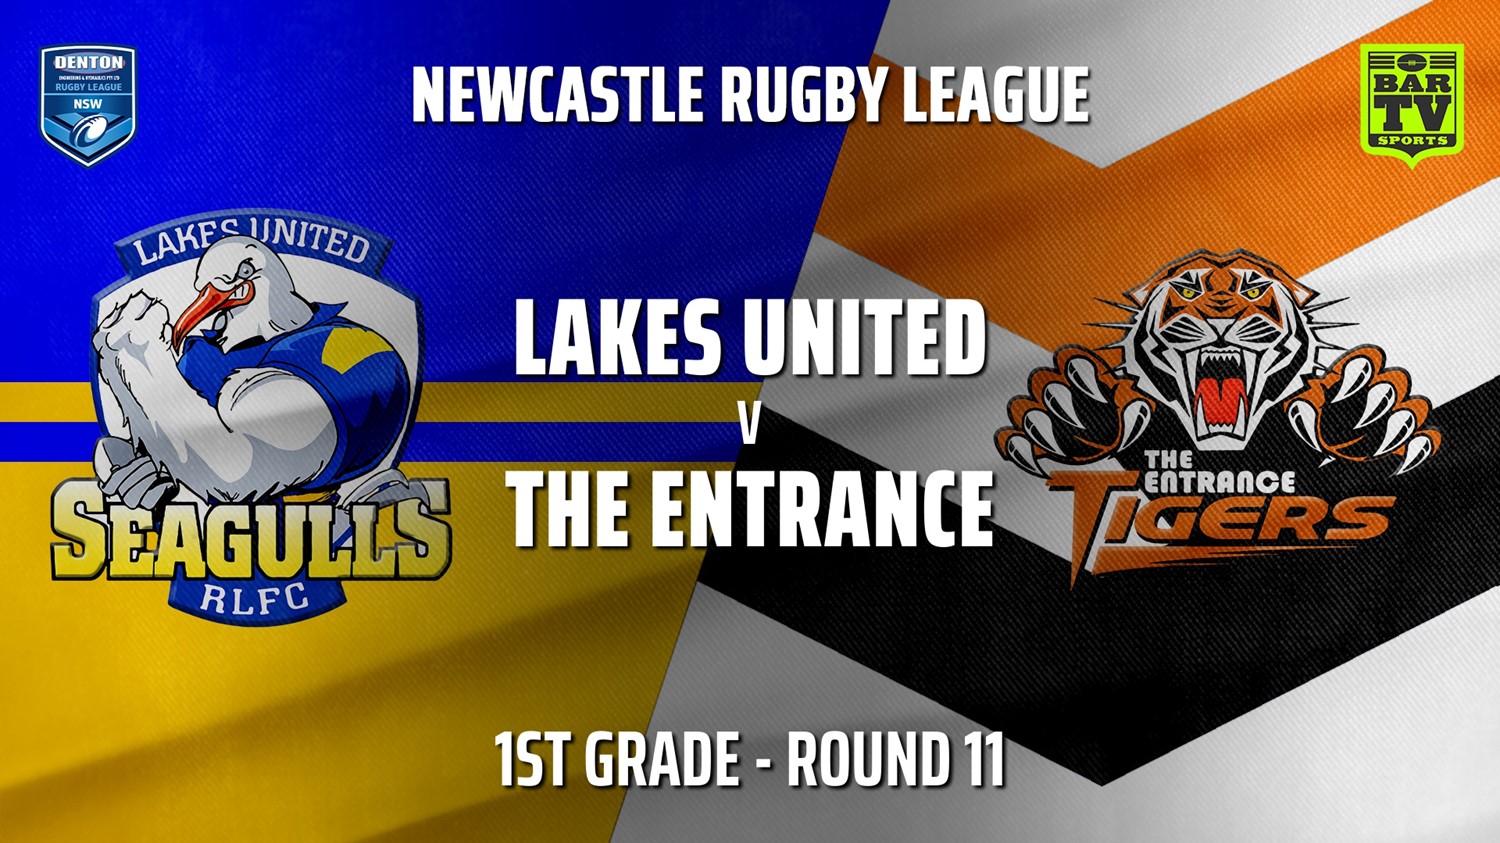 210612-Newcastle Round 11 - 1st Grade - Lakes United v The Entrance Tigers Slate Image